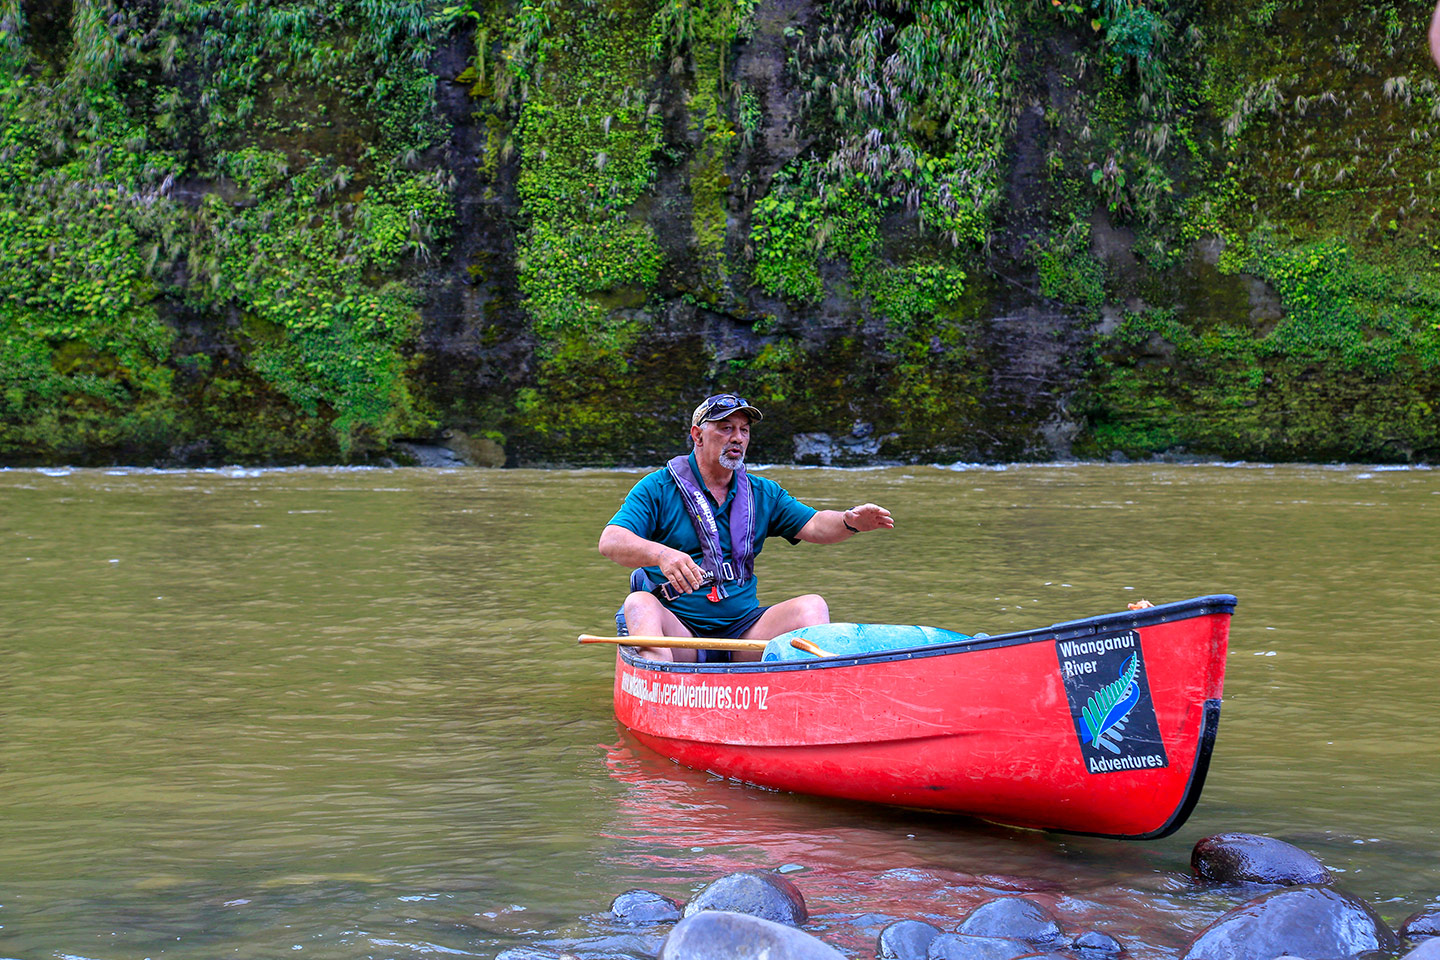 The Onedayer Adventure - Whanganui River Adventures